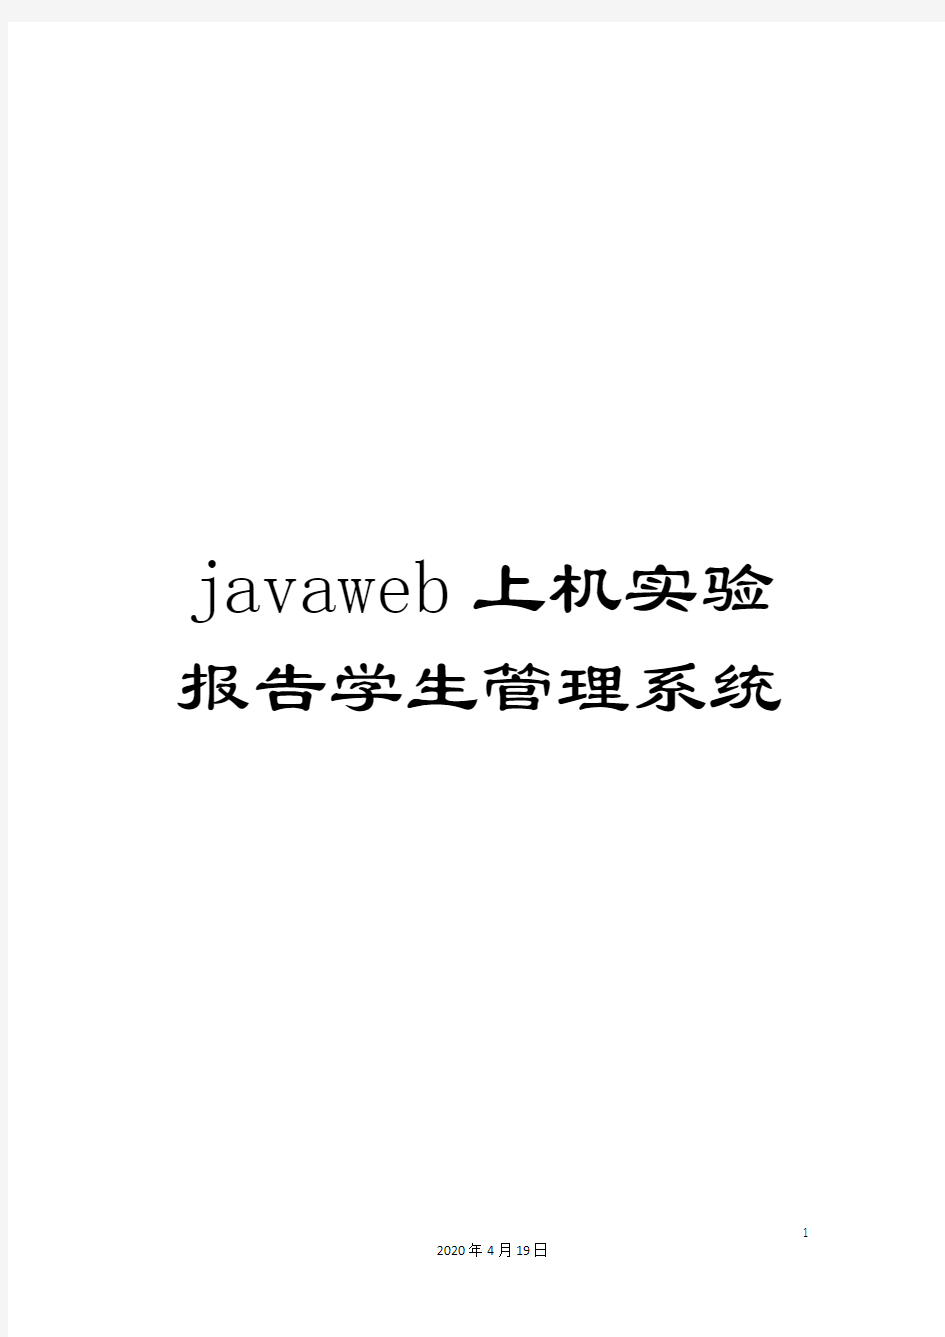 javaweb上机实验报告学生管理系统